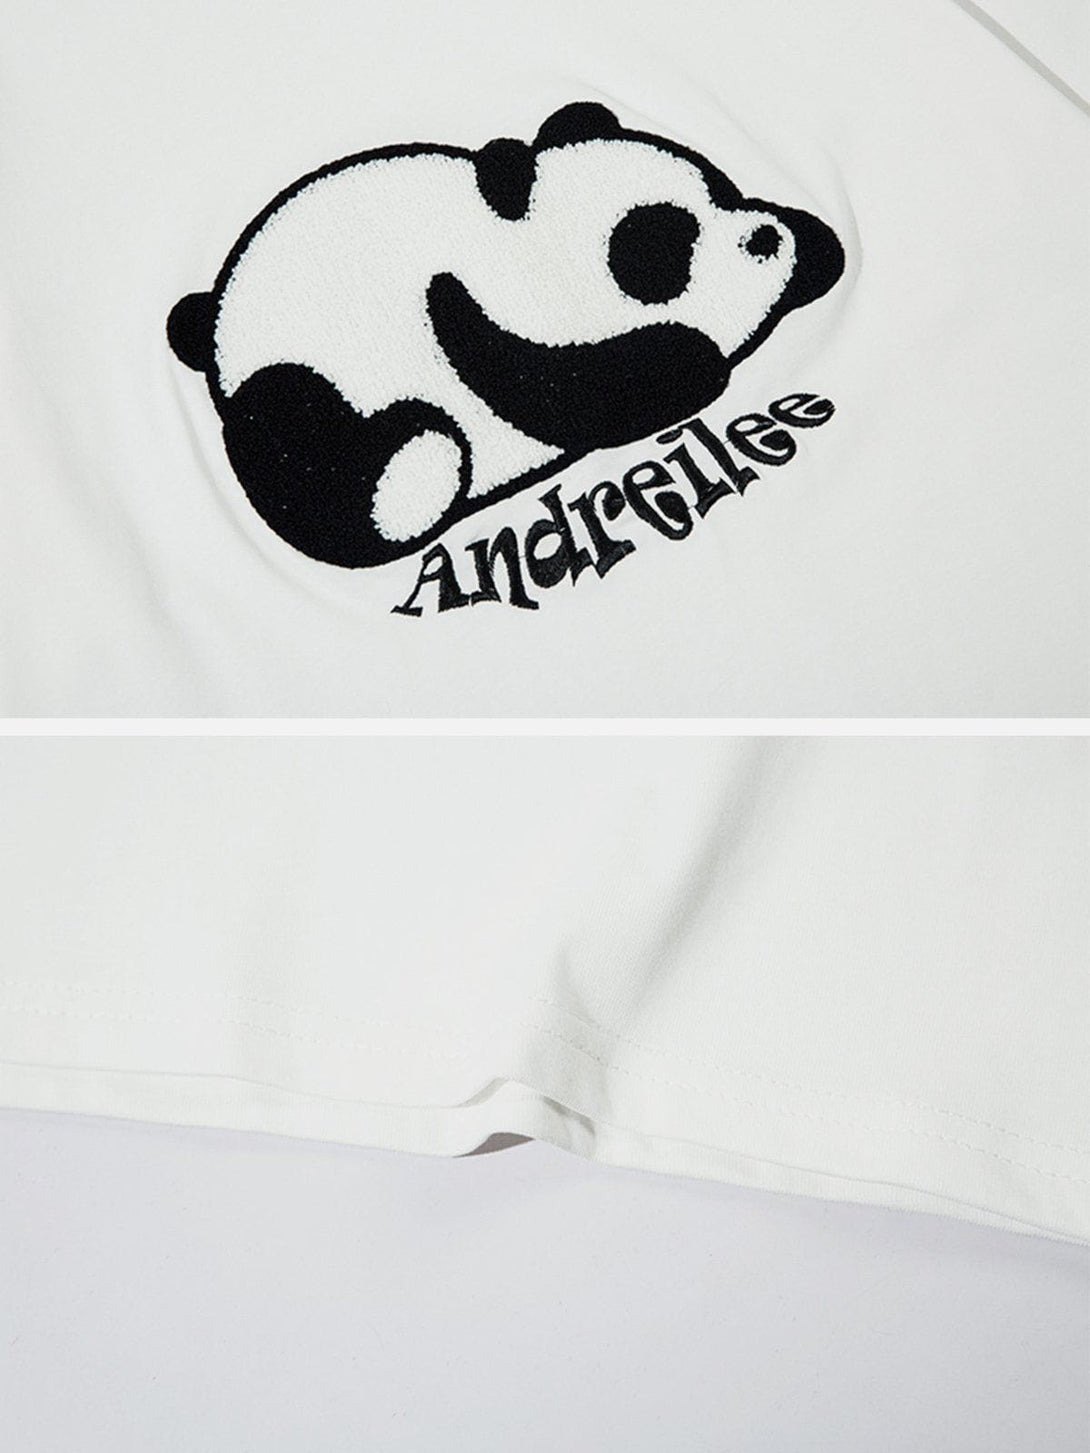 AlanBalen® - Towel Embroidery Panda Print Tee AlanBalen